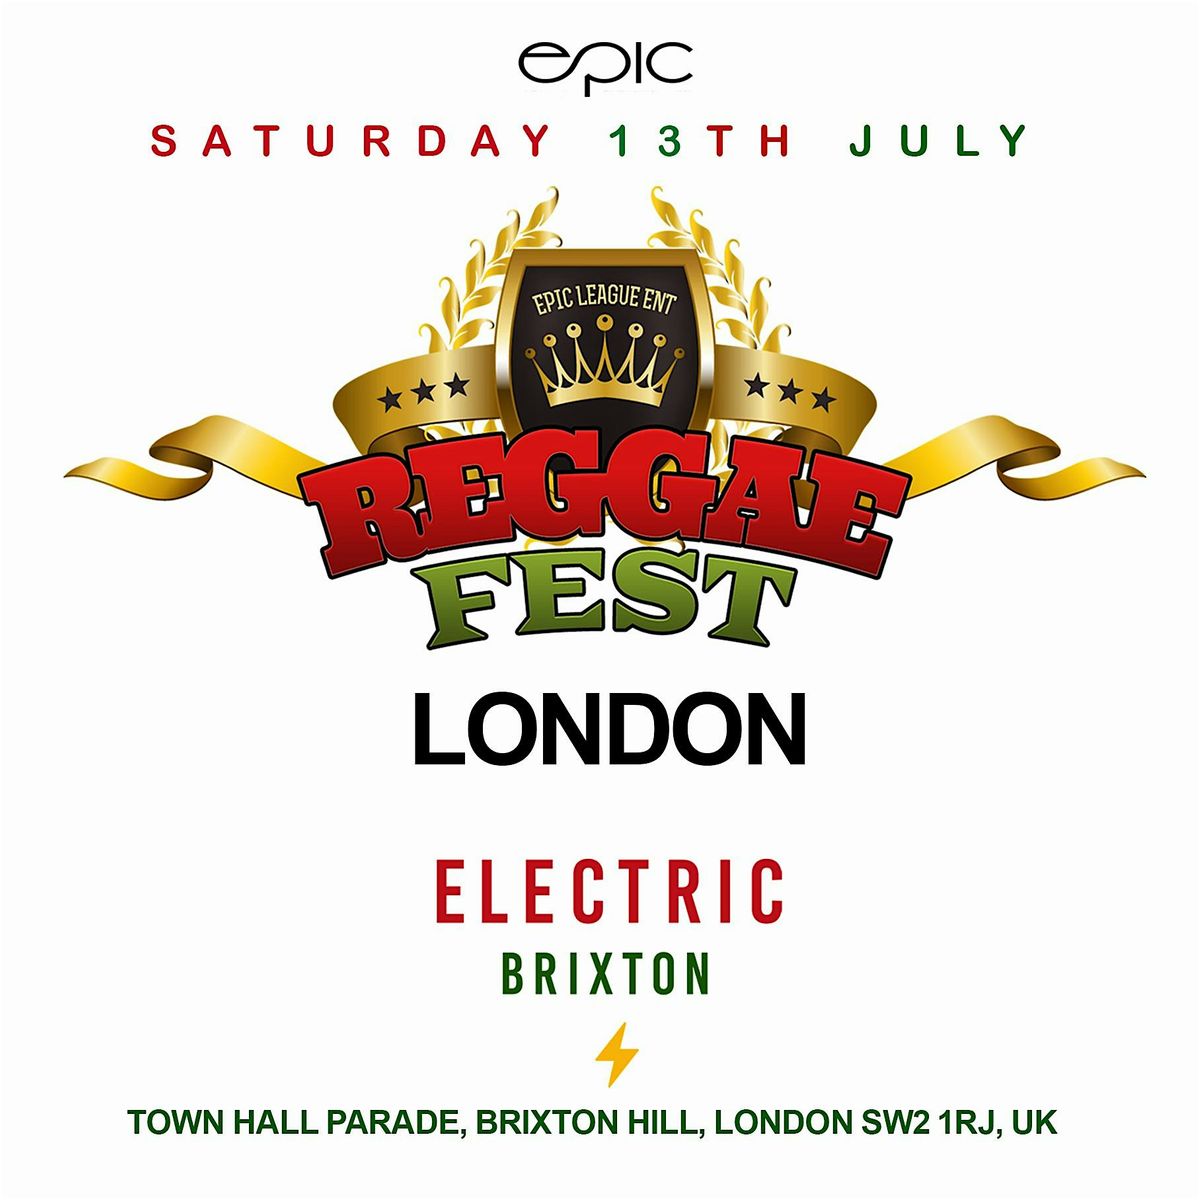 Reggae Fest London at Electric Brixton